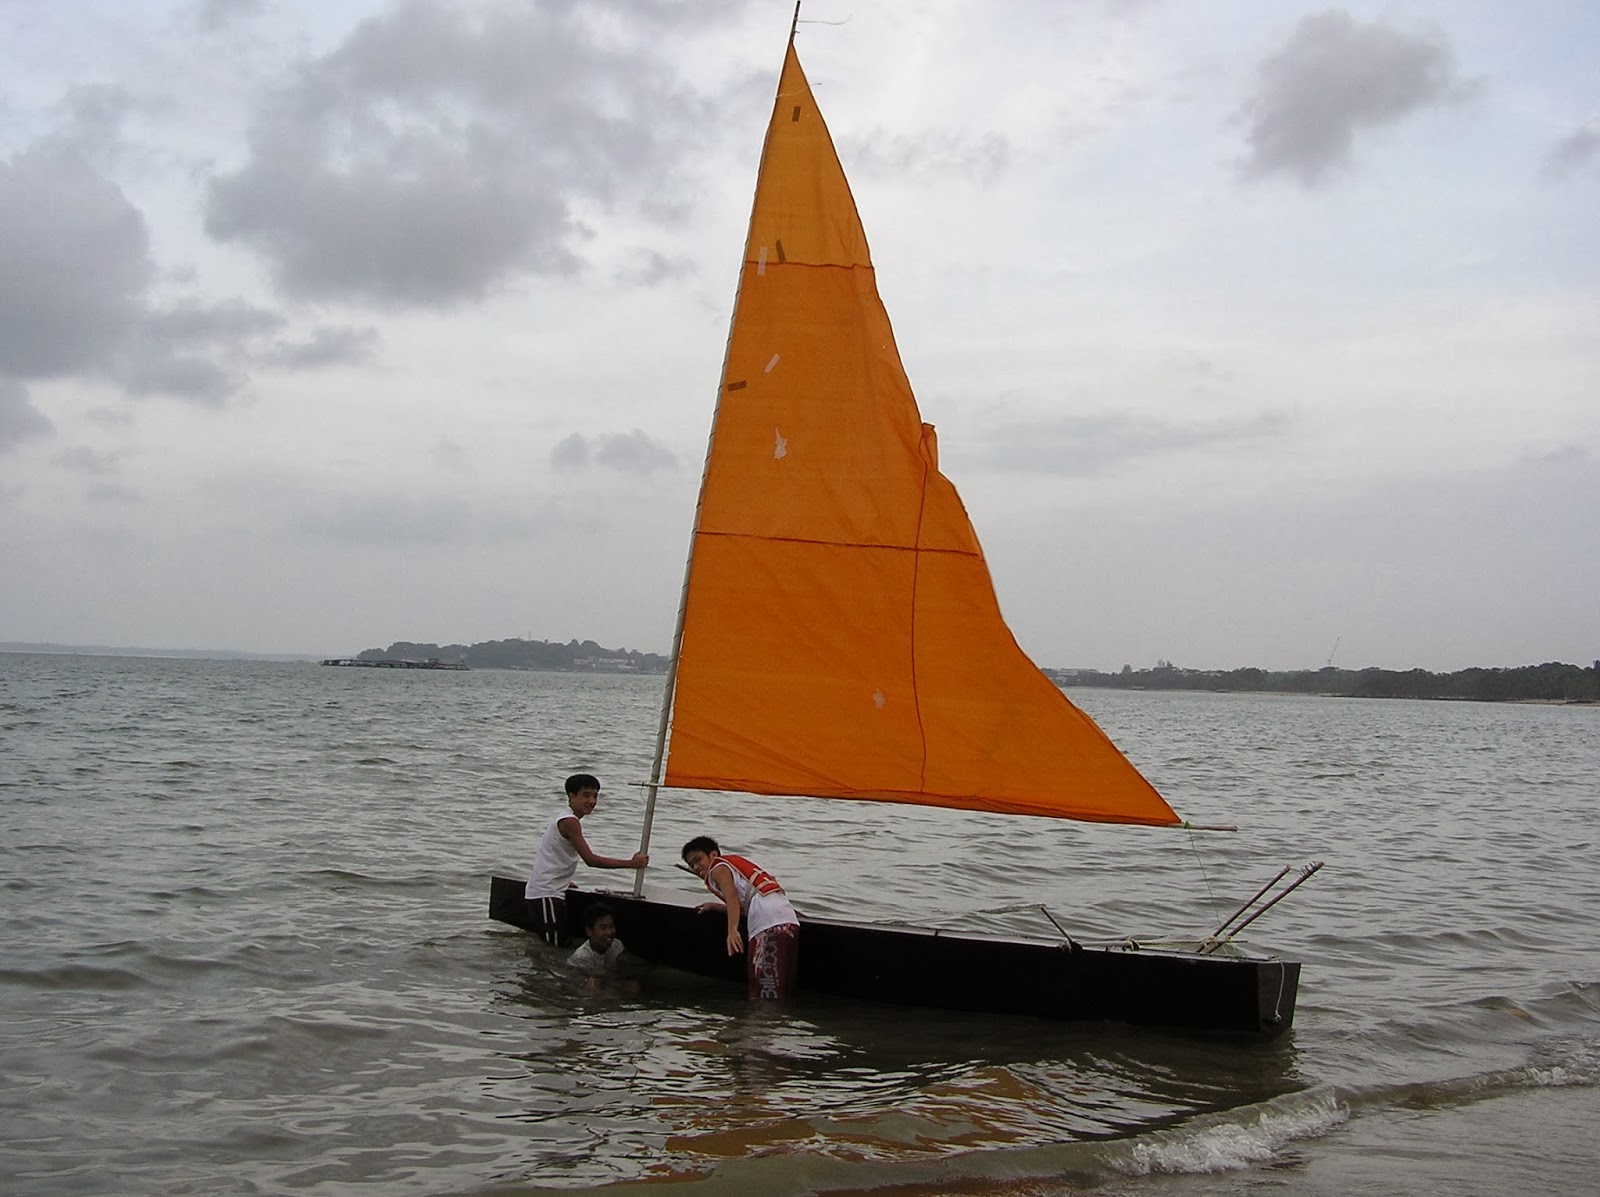 Project Gridless: DIY Sailboats